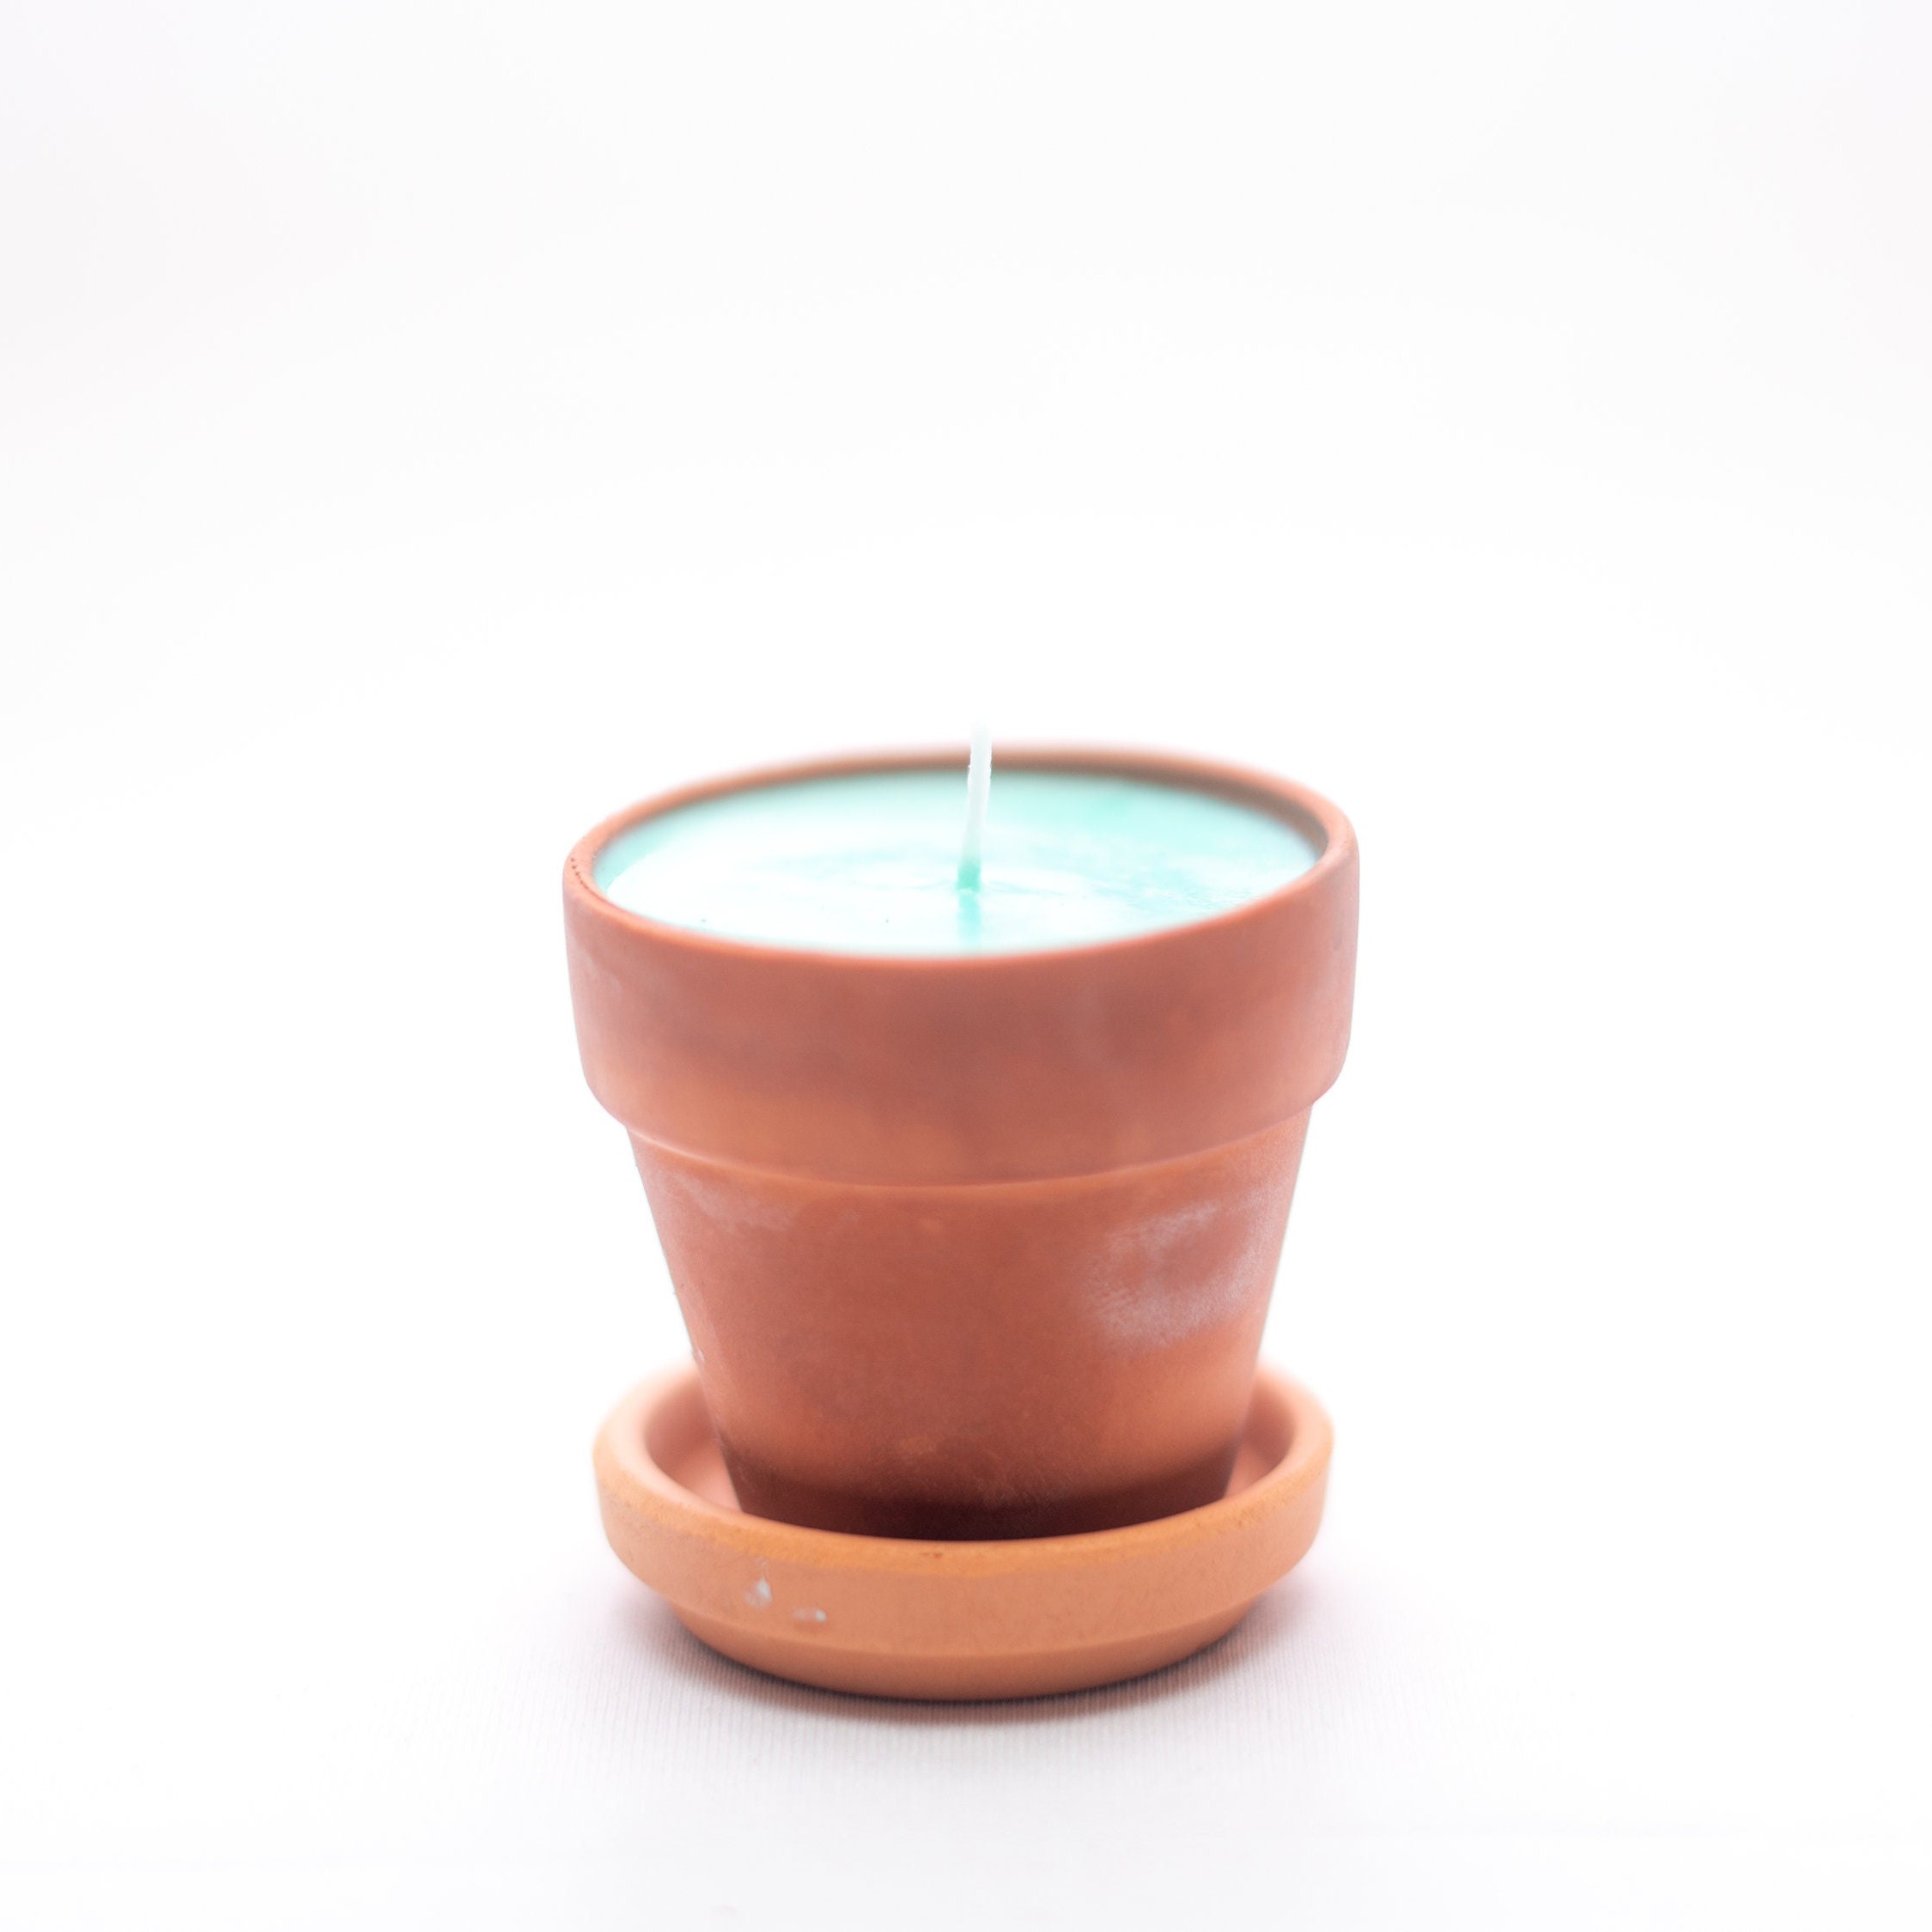 Mini terra cota Pot Candle Holders